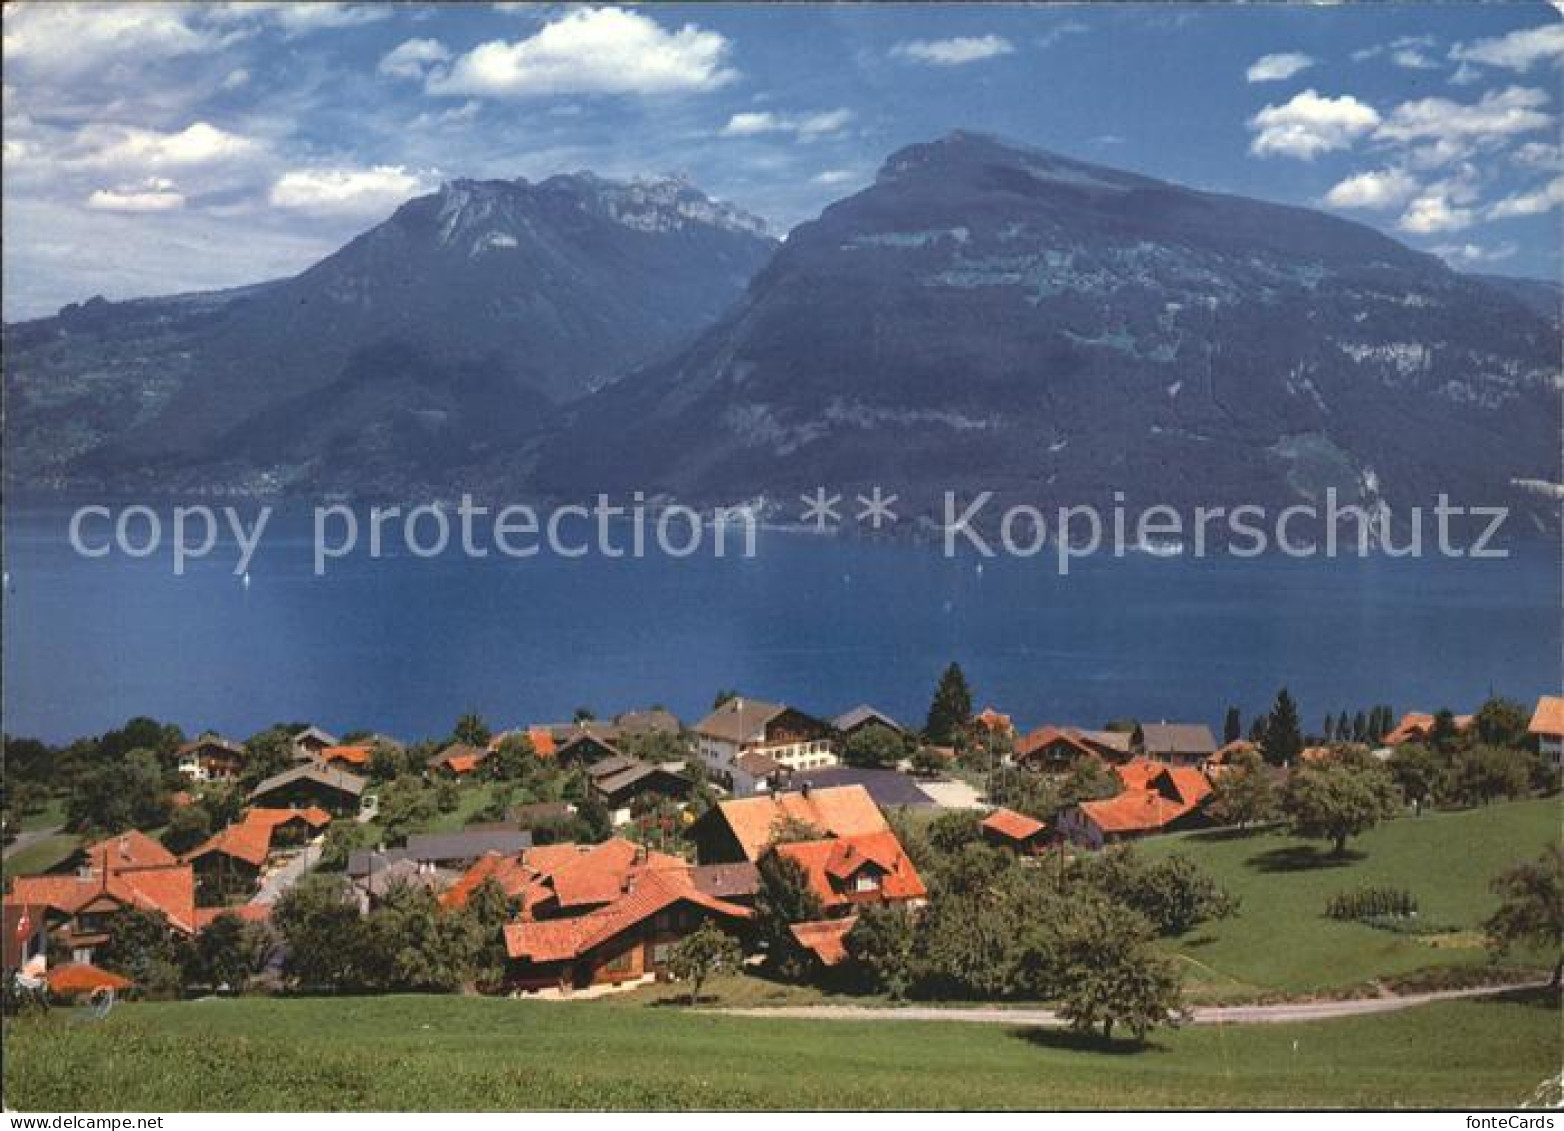 11875510 Krattigen Sigriswiler Rothorn Niederhorn Thunersee Krattigen - Other & Unclassified